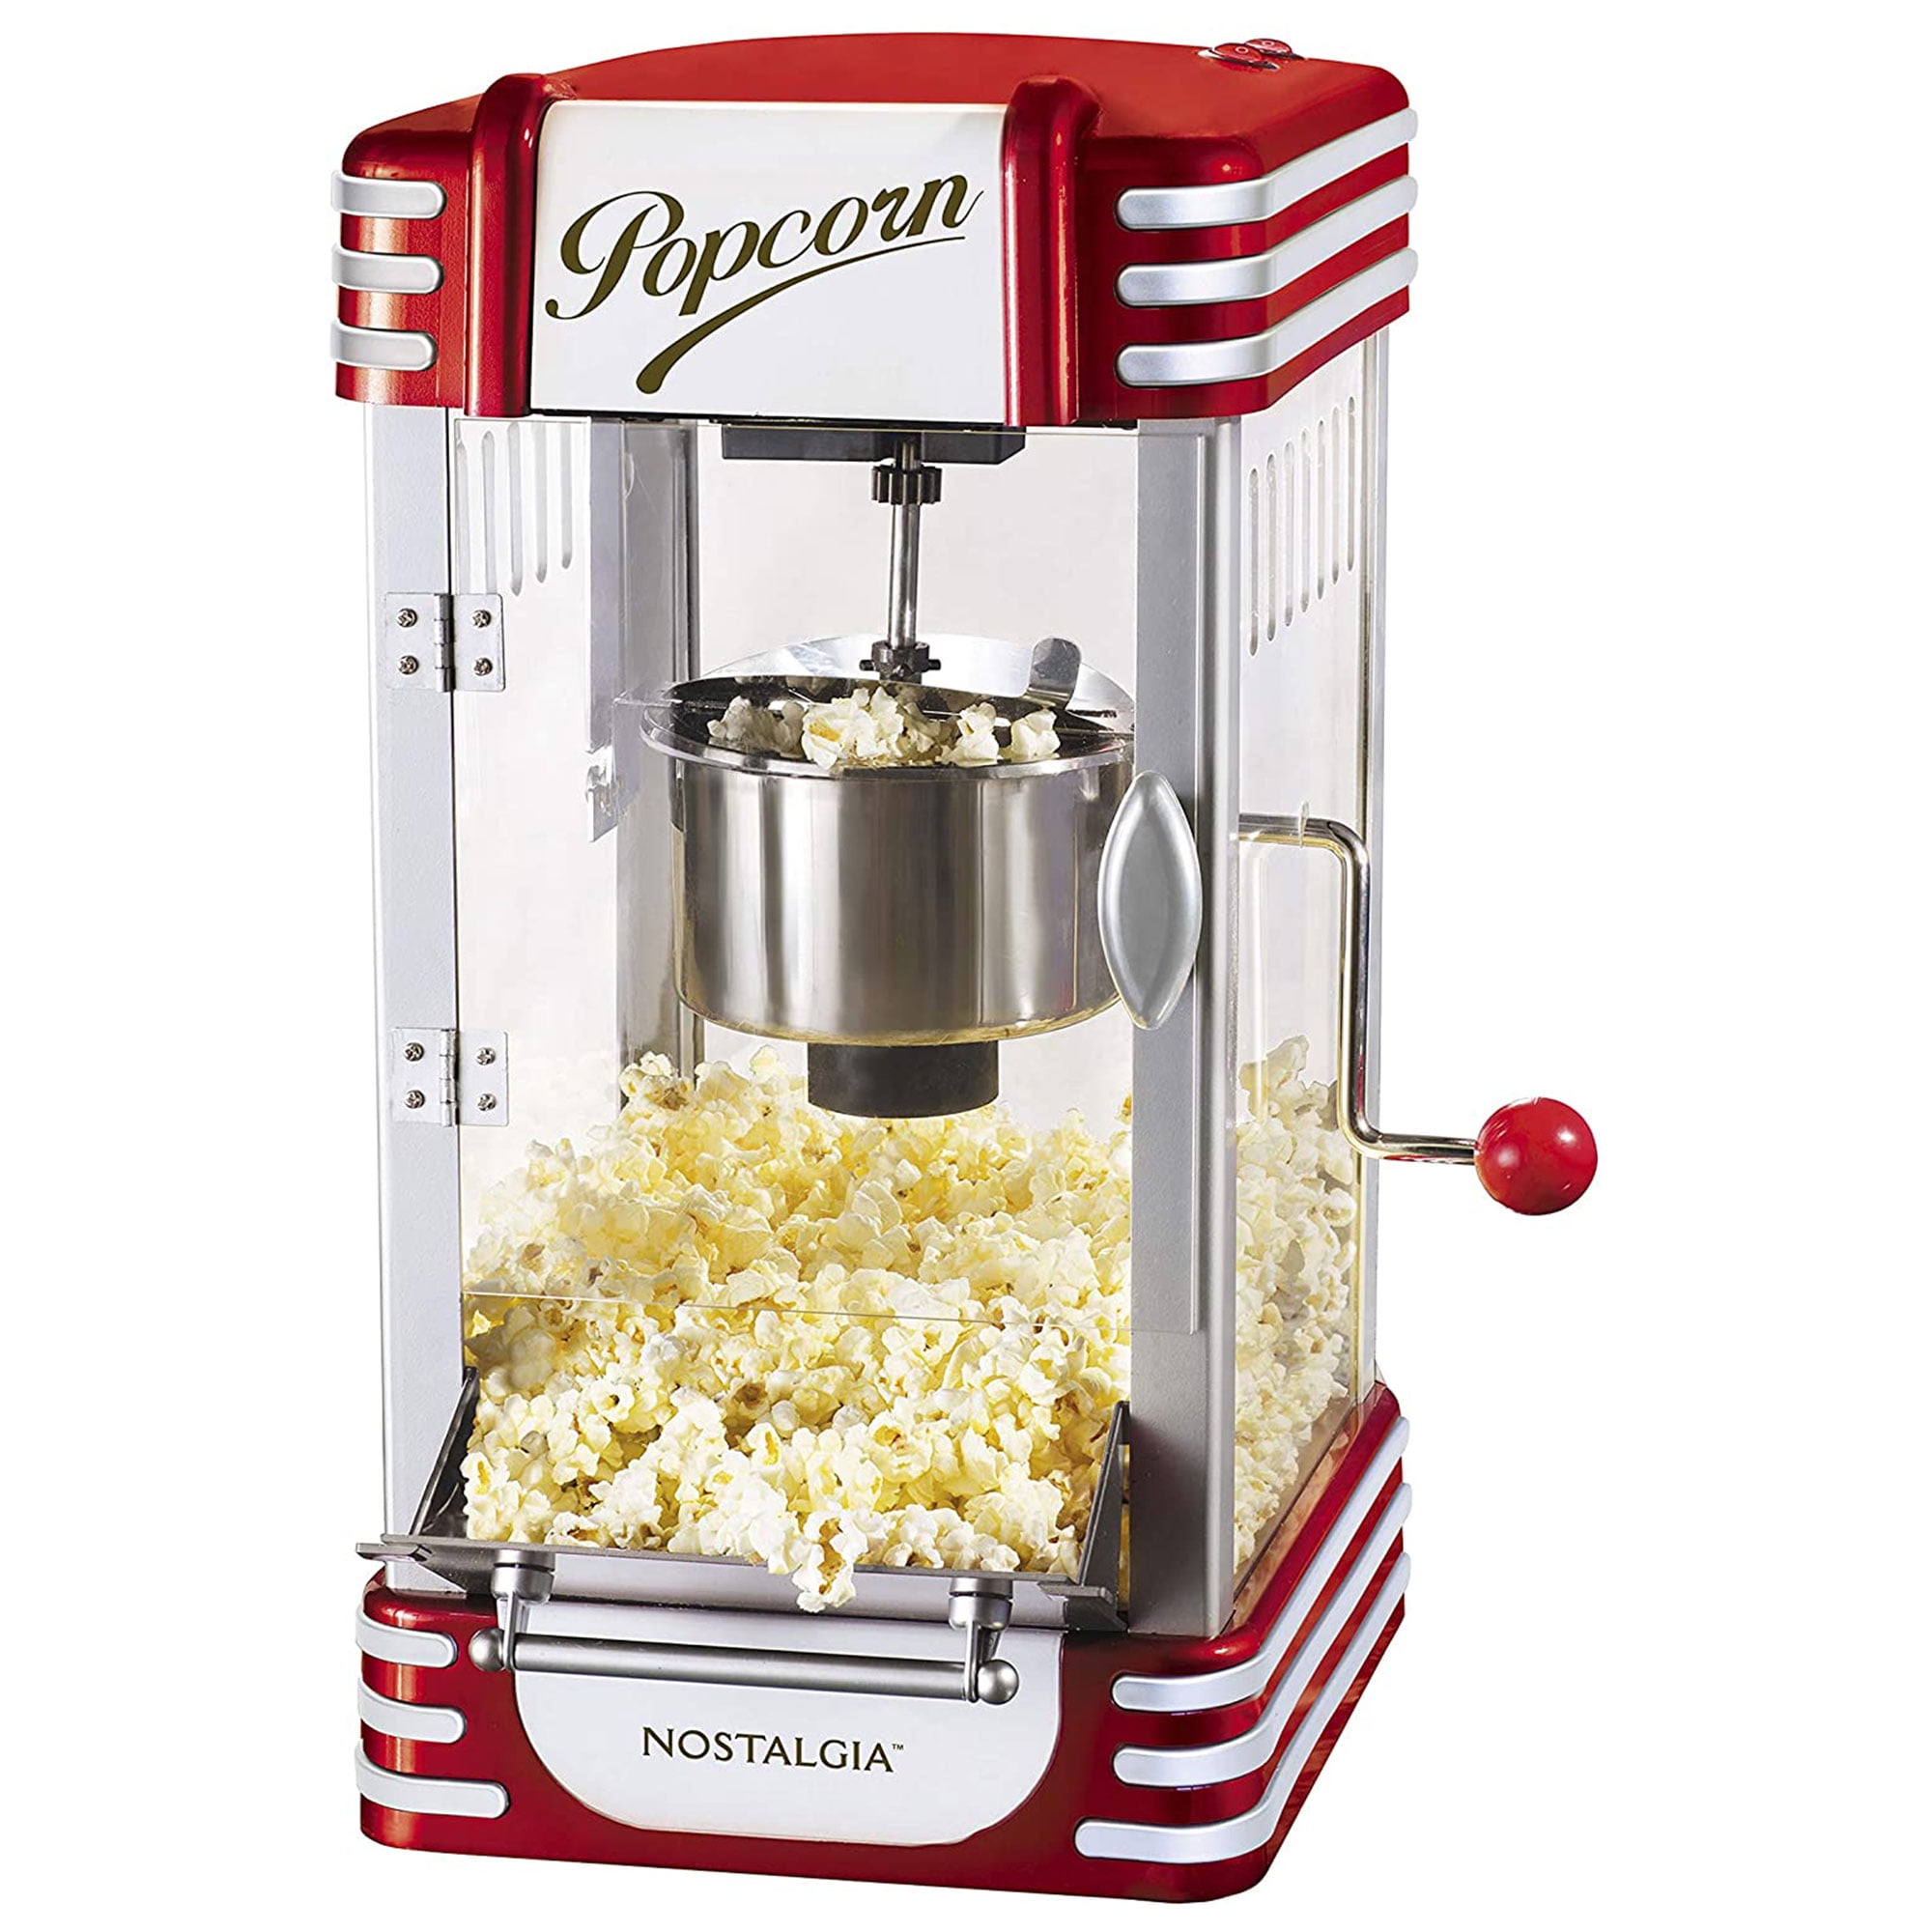 Nostalgia Electric Popcorn Popper